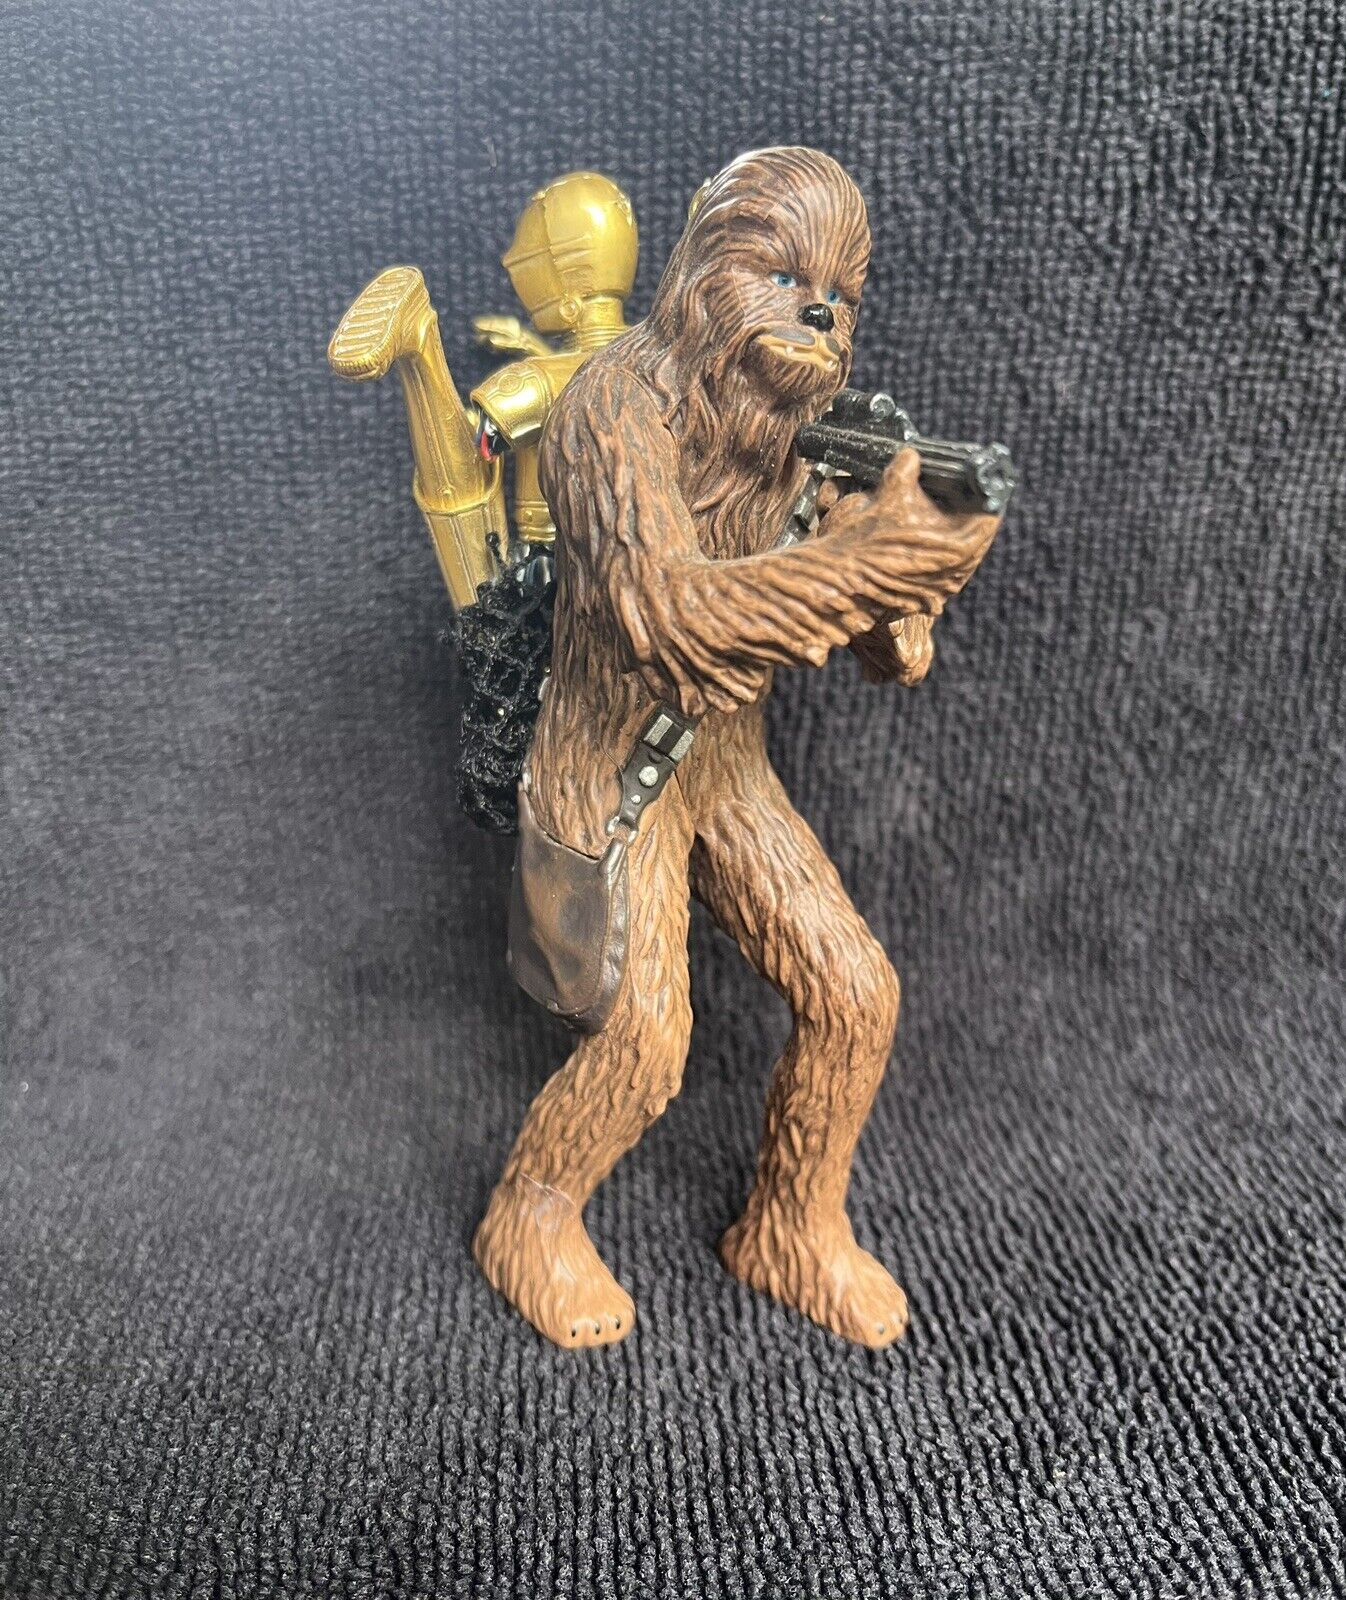 2004 Hallmark Keepsake Chewbacca C-3PO Collector’s Series Ornament Star Wars